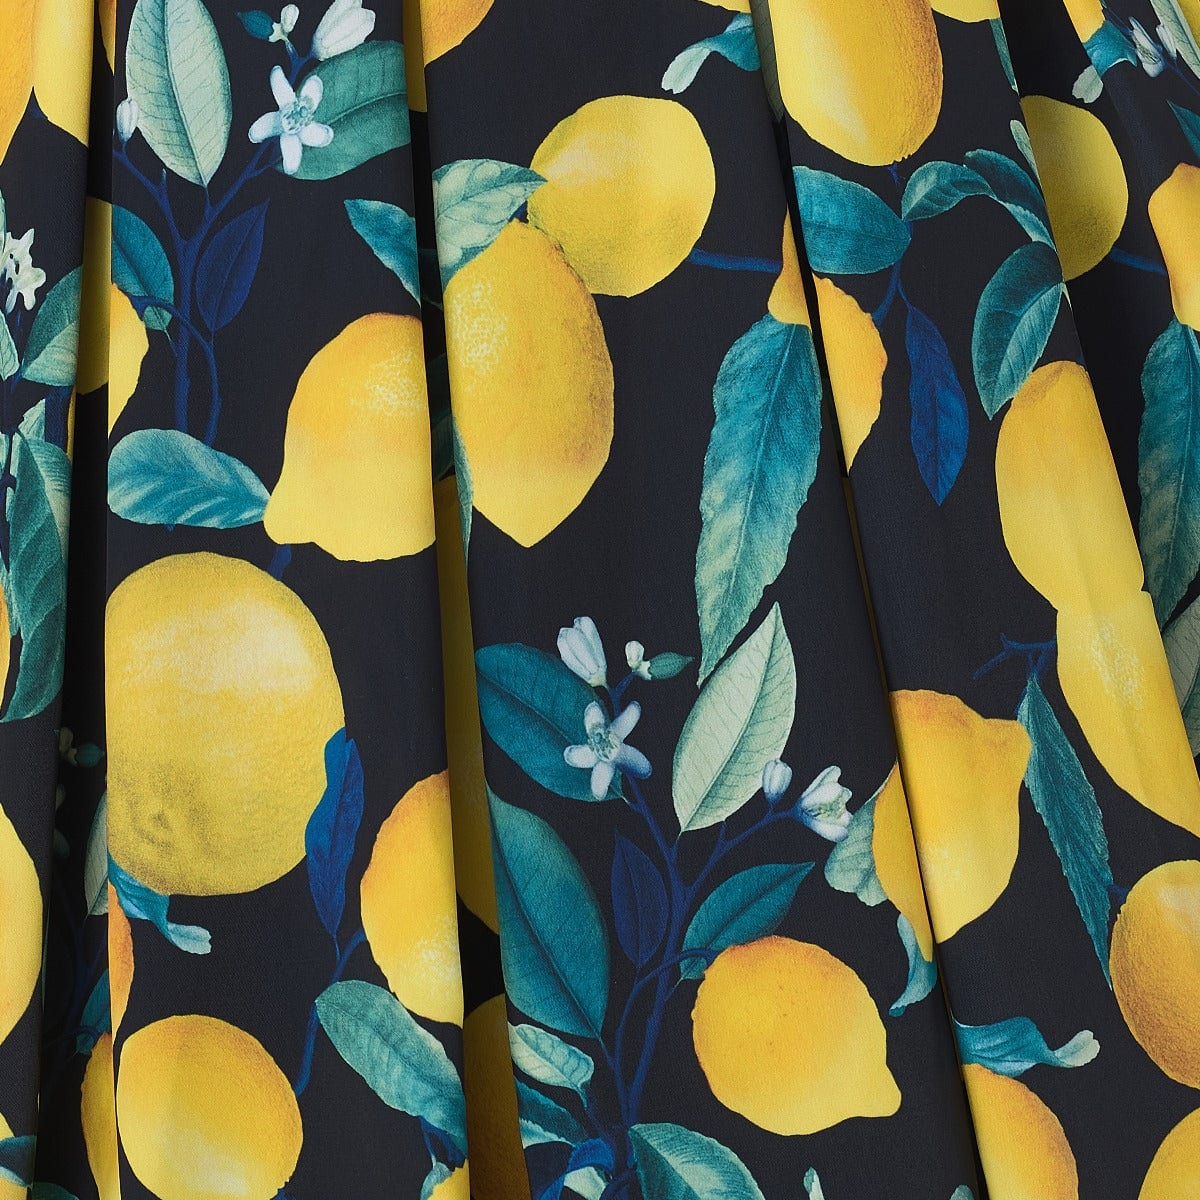 Amanda Vintage Inspired Lemon Print Dress in Dark Blue with a Scoop Neckline & Hidden Pockets